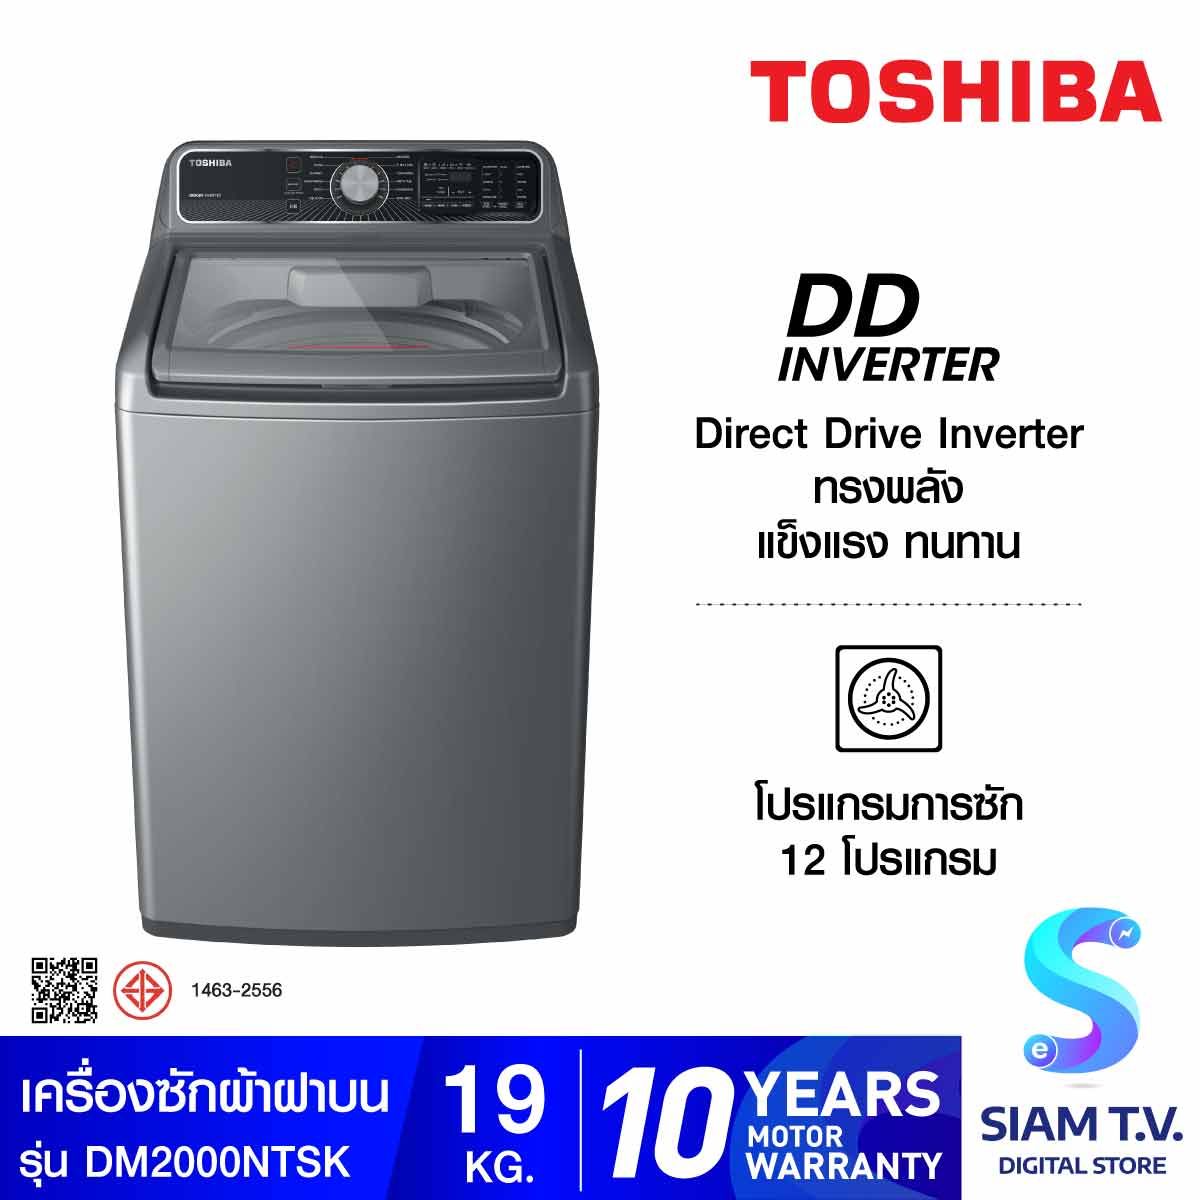 TOSHIBA เครื่องซักผ้าฝาบน 19KG INVERTER สี Silver  รุ่น AW-DM2000NT(SK)